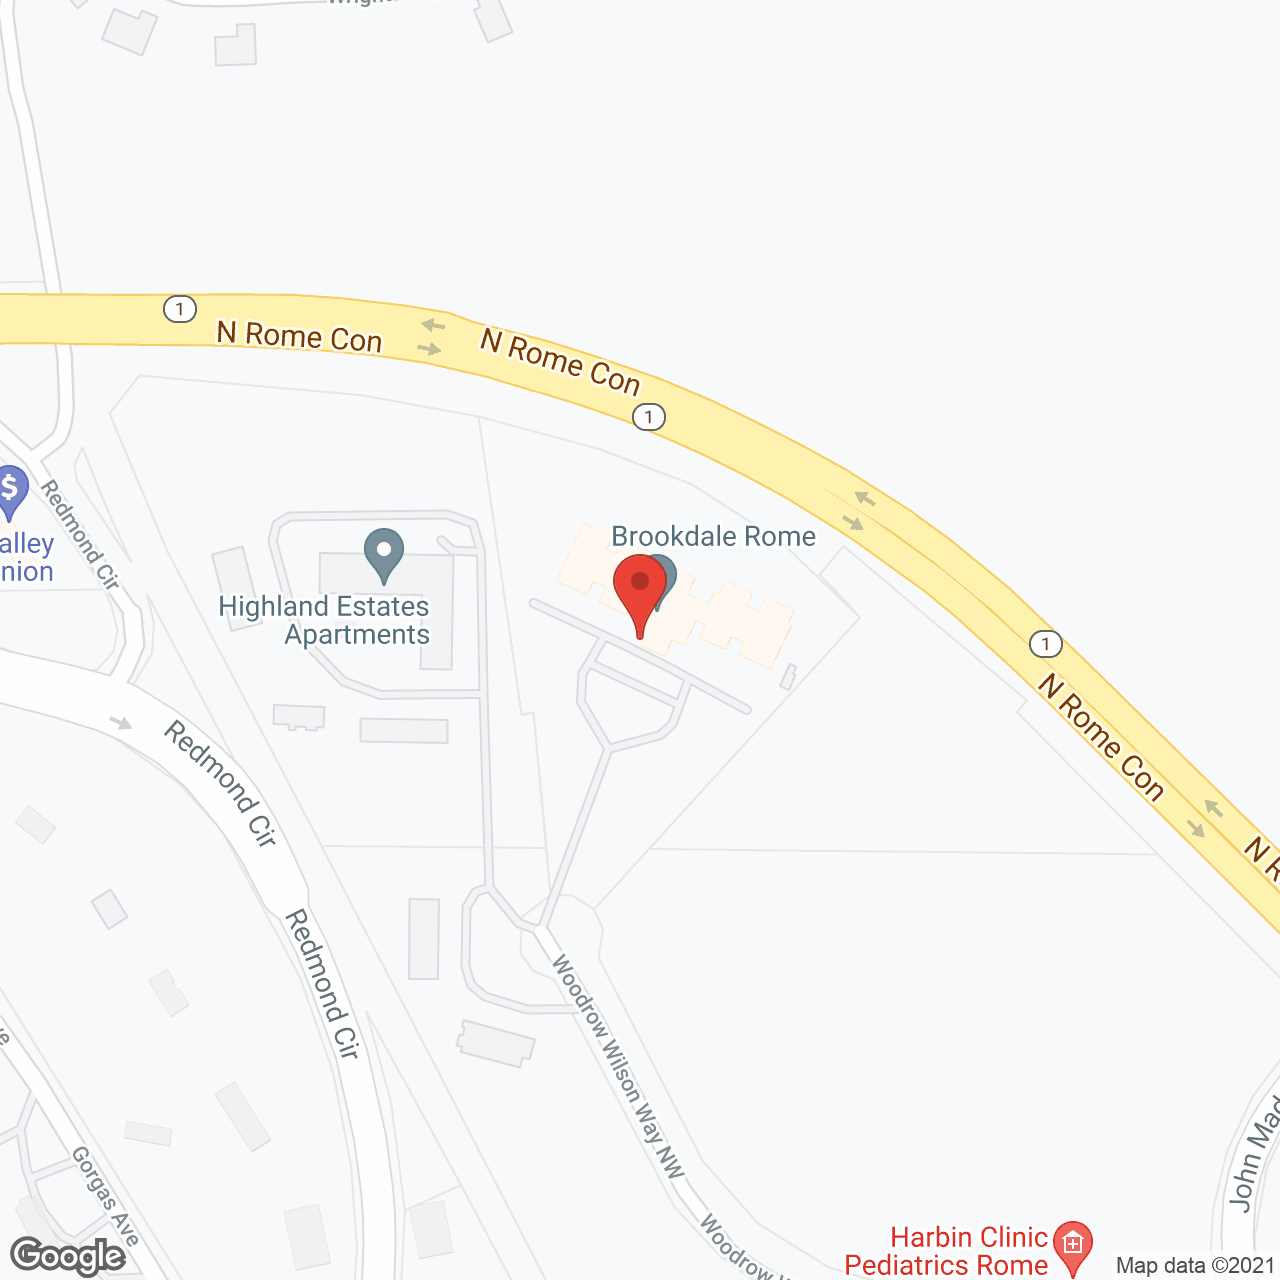 Brookdale Rome in google map